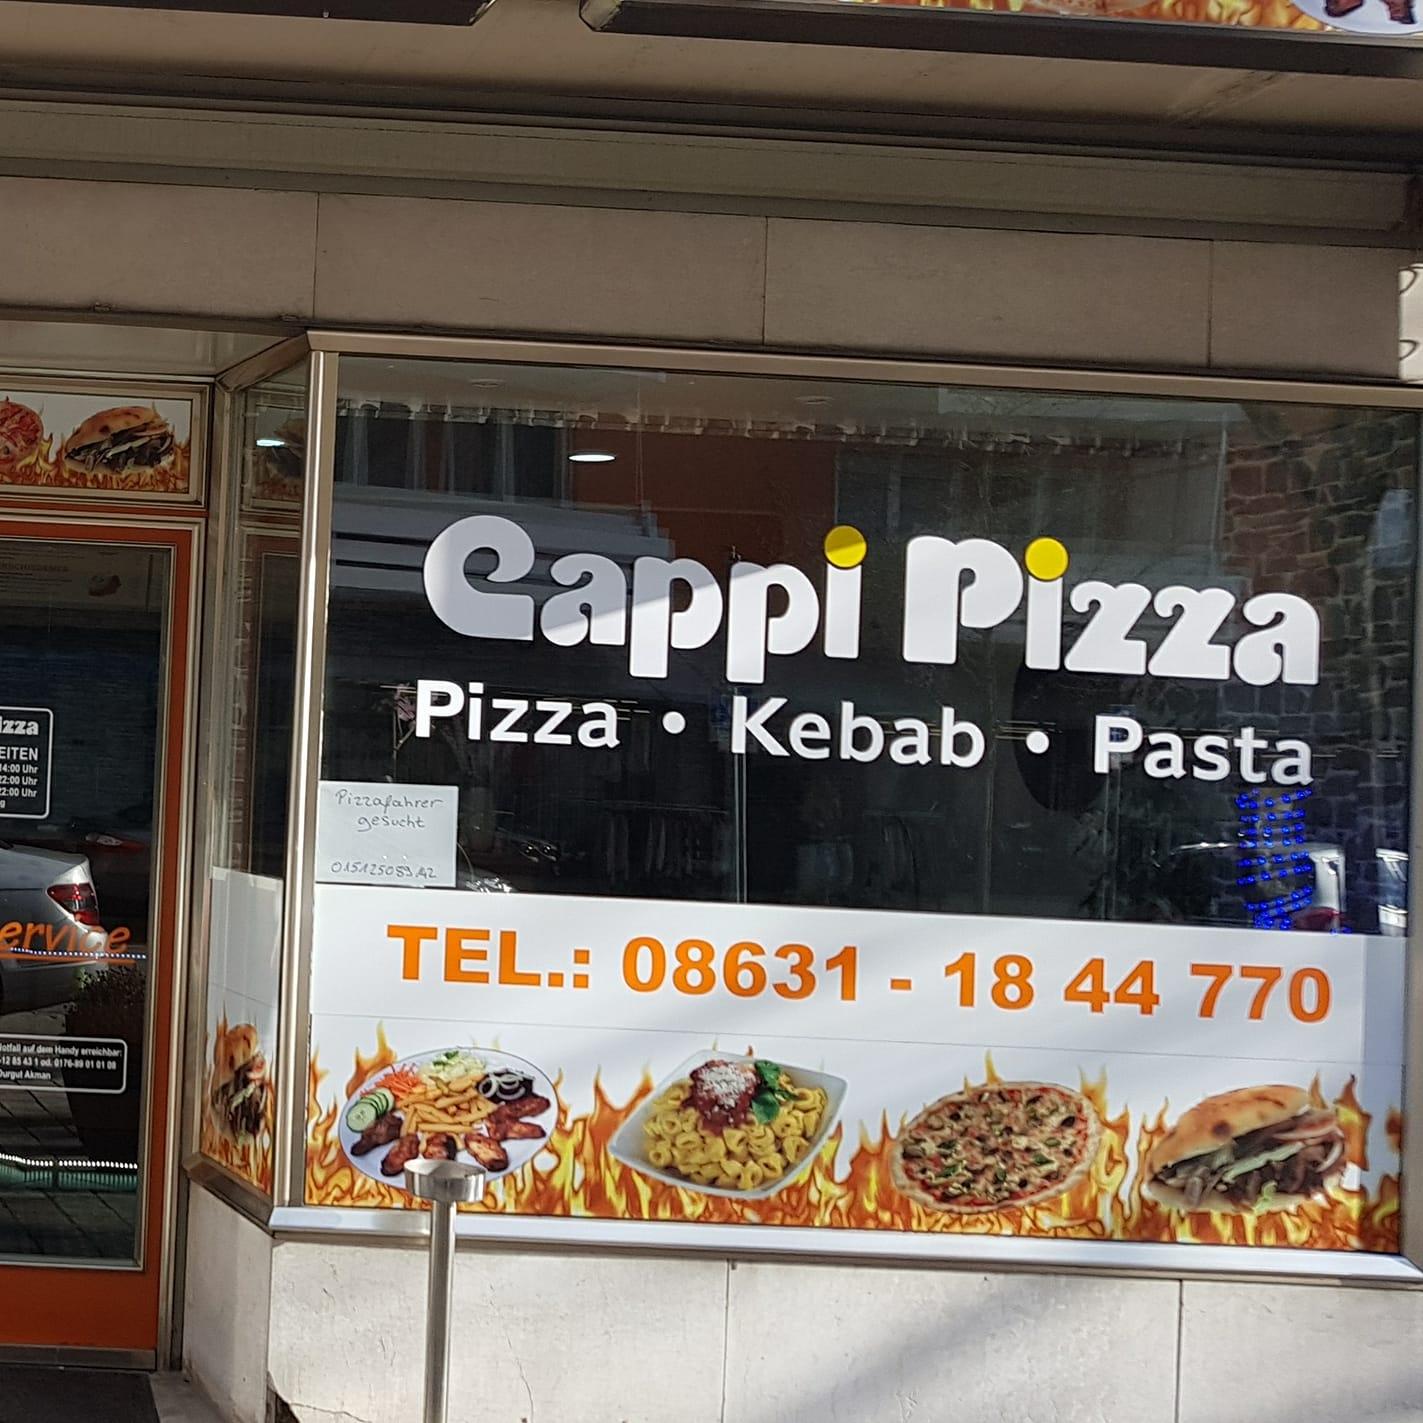 Restaurant "Cappi Pizza" in Töging am Inn